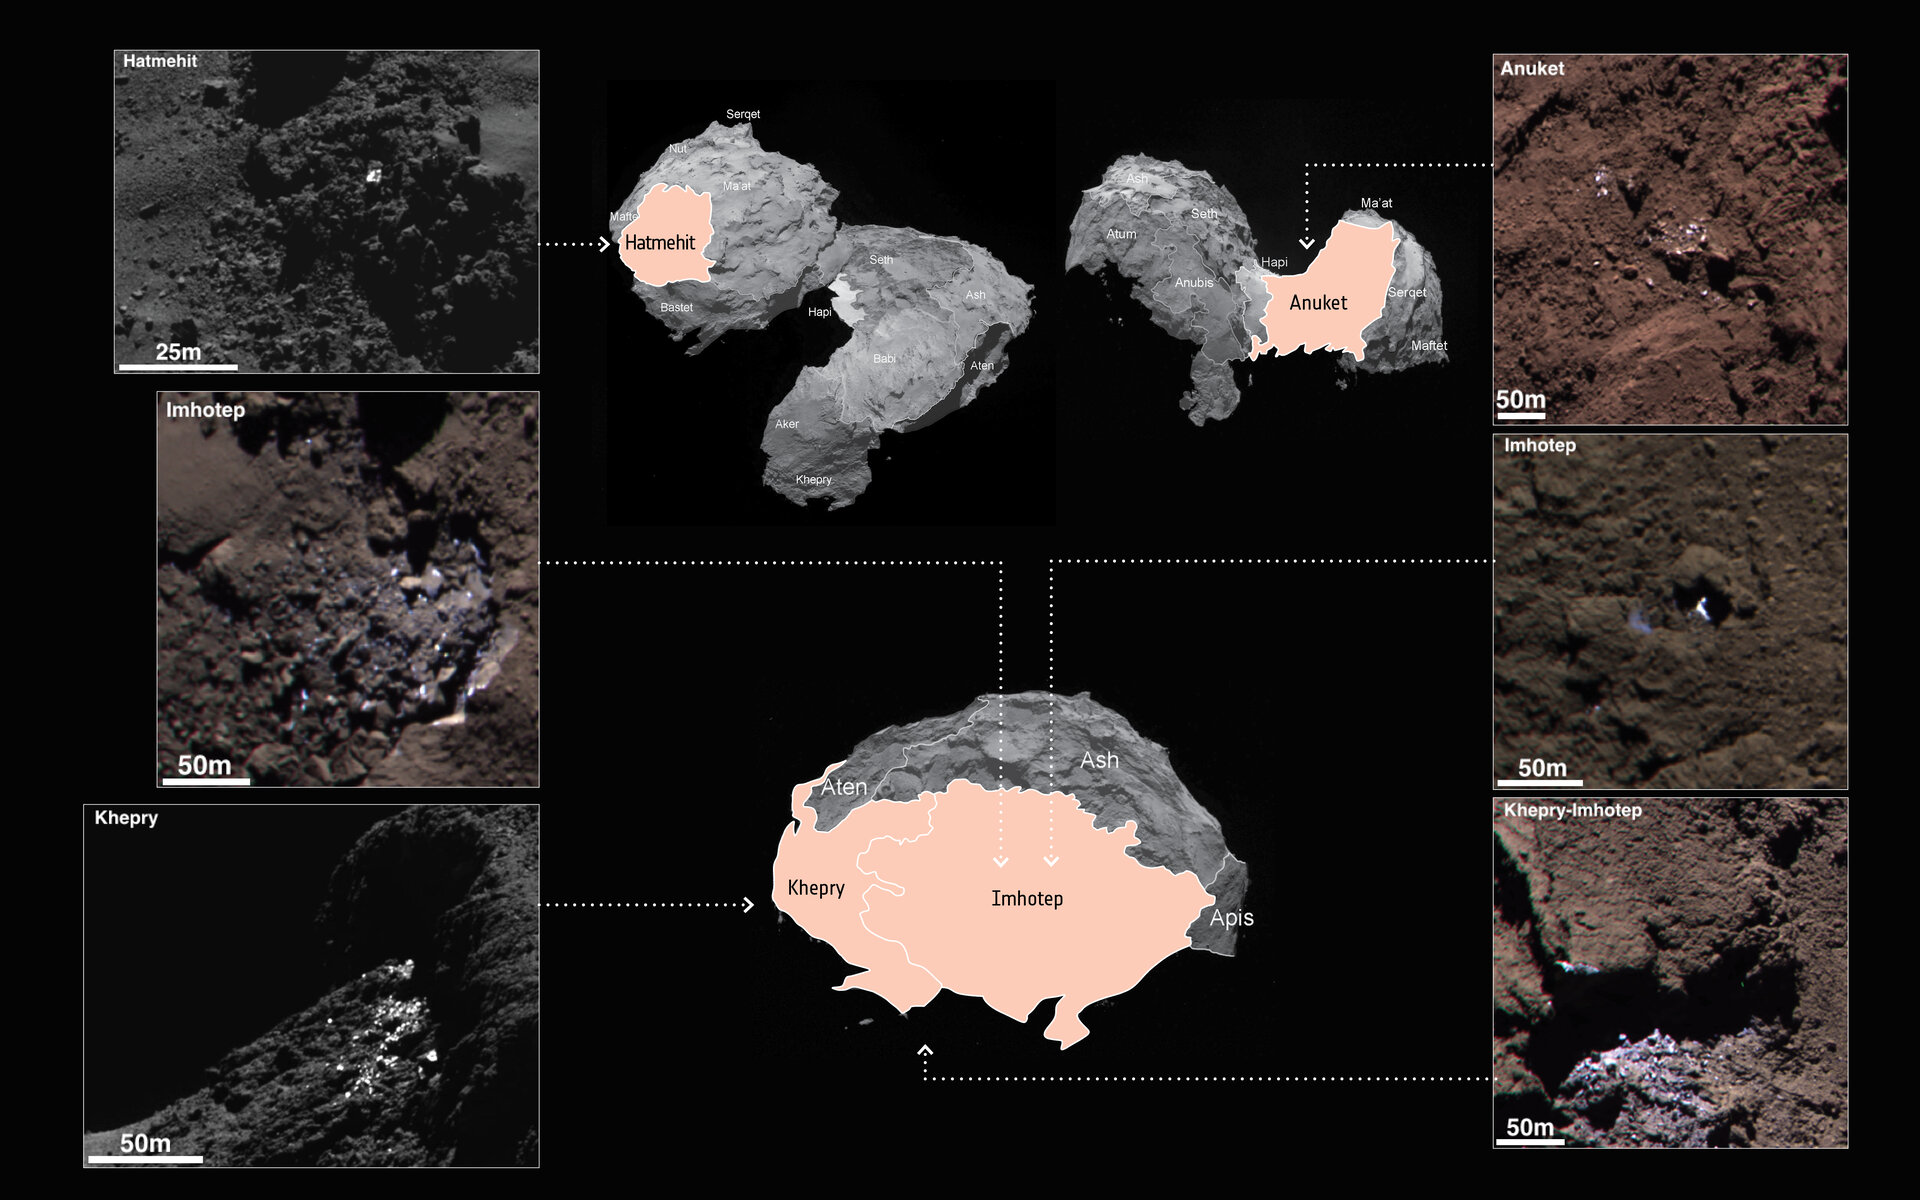 Ice on Comet 67P/Churyumov-Gerasimenko